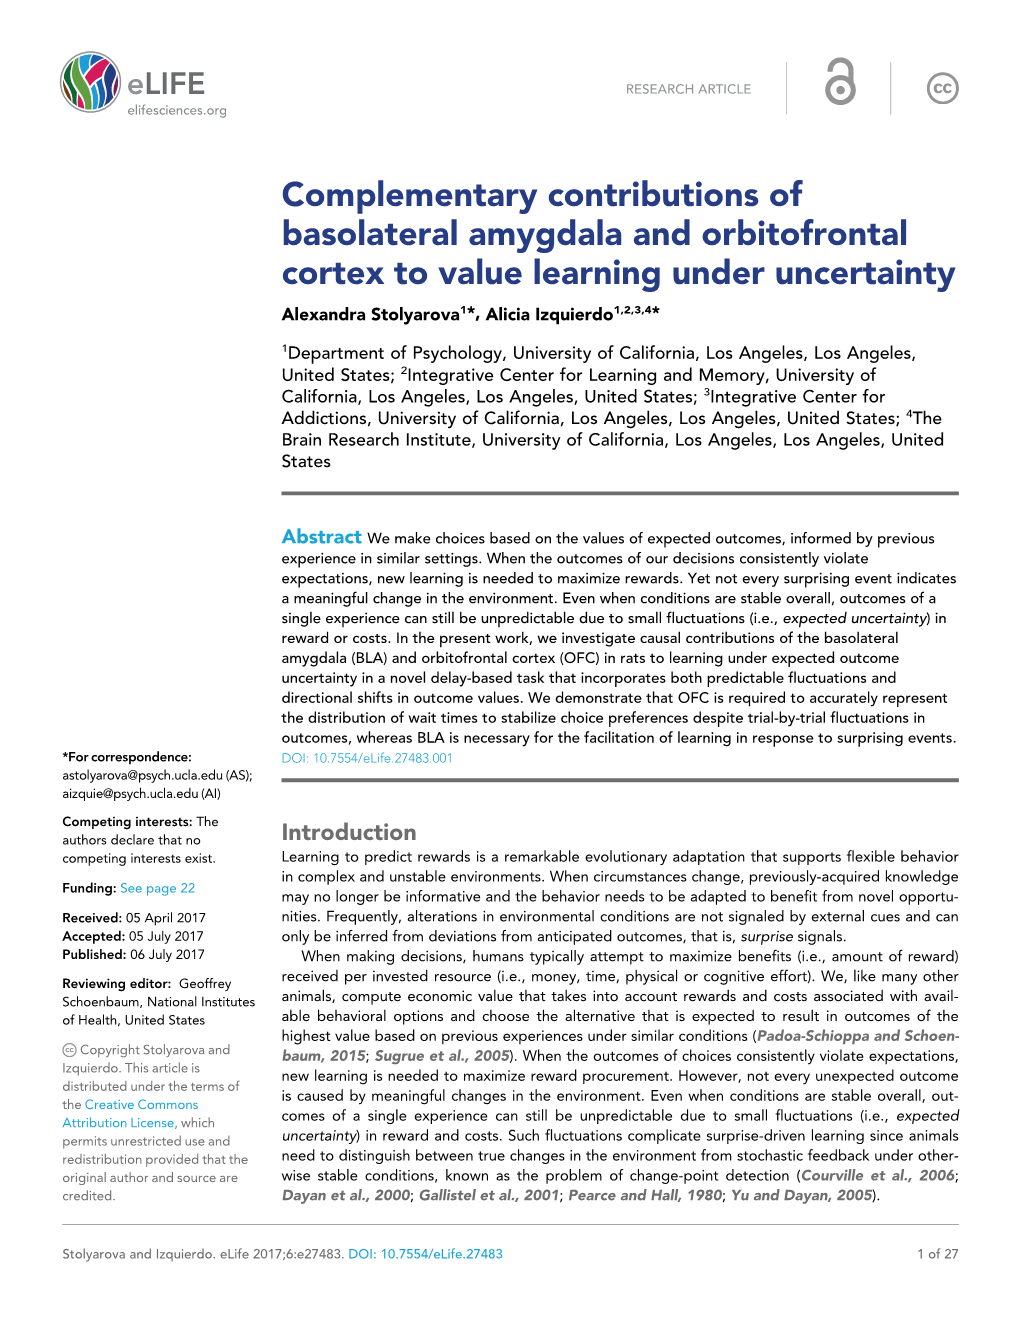 Complementary Contributions of Basolateral Amygdala and Orbitofrontal Cortex to Value Learning Under Uncertainty Alexandra Stolyarova1*, Alicia Izquierdo1,2,3,4*